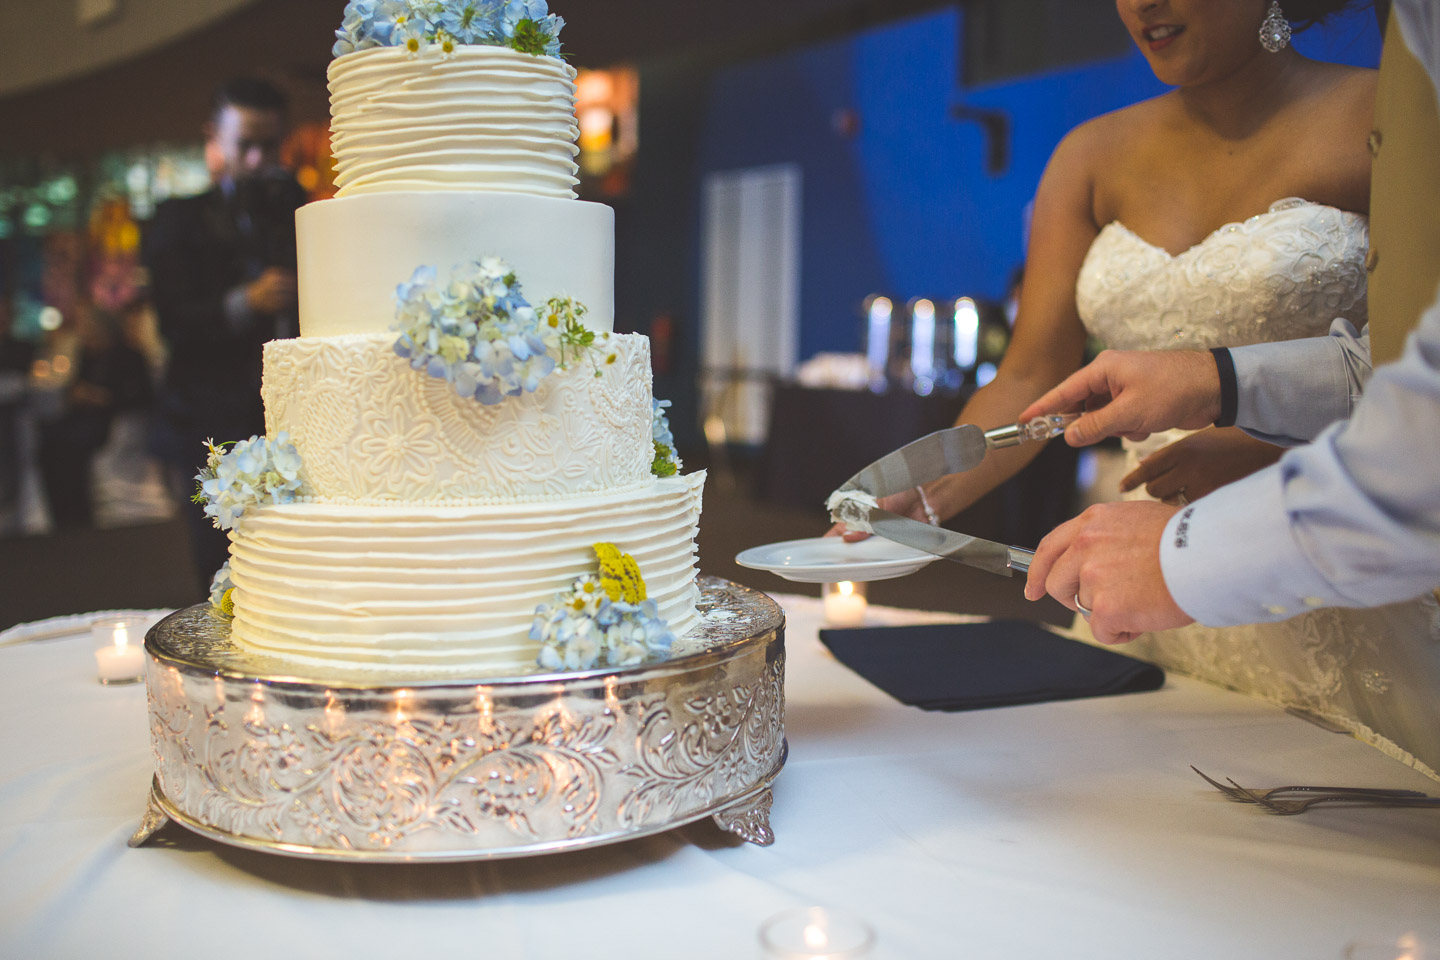 silver-garden-events-center-michigan-southfield-bride-groom-cut-cake-slice